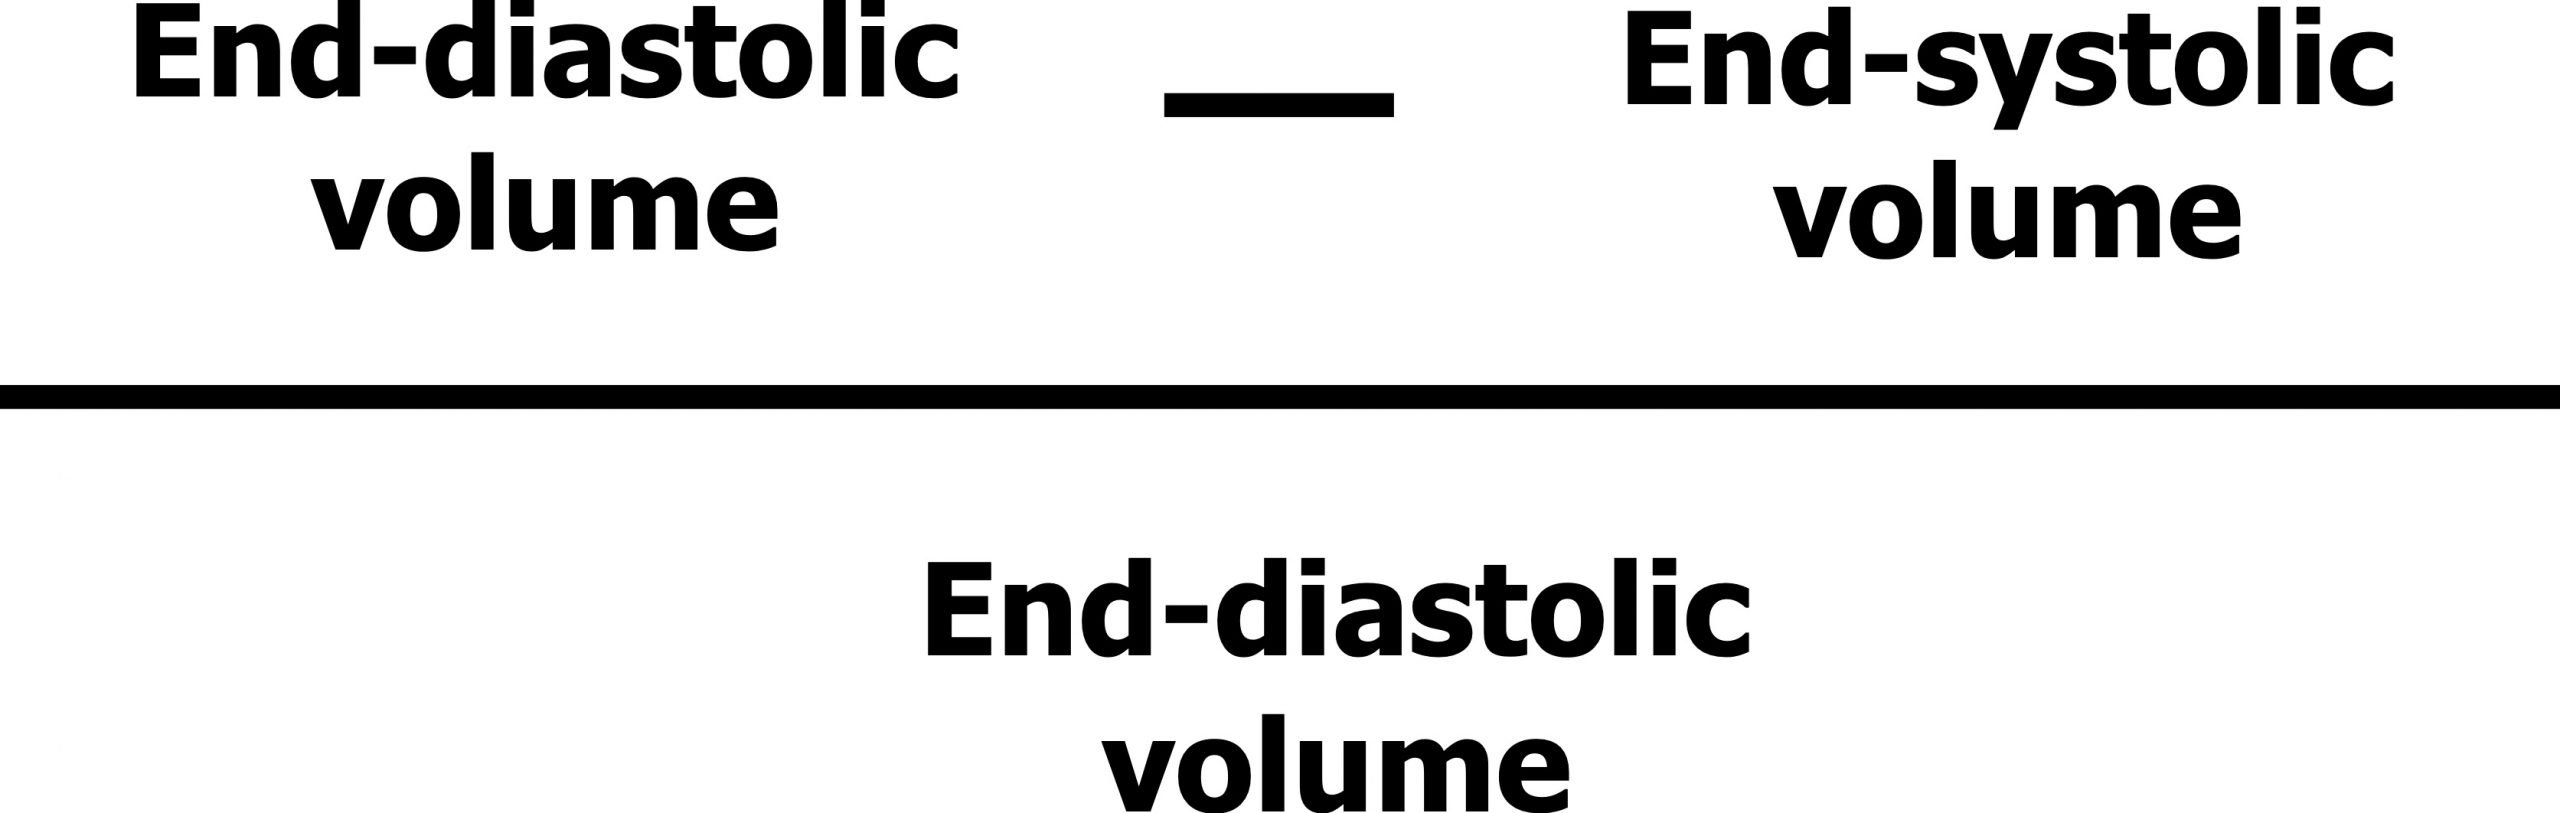 End-diastolic volume minus end-systolic volume divided by end-diastolic volume.